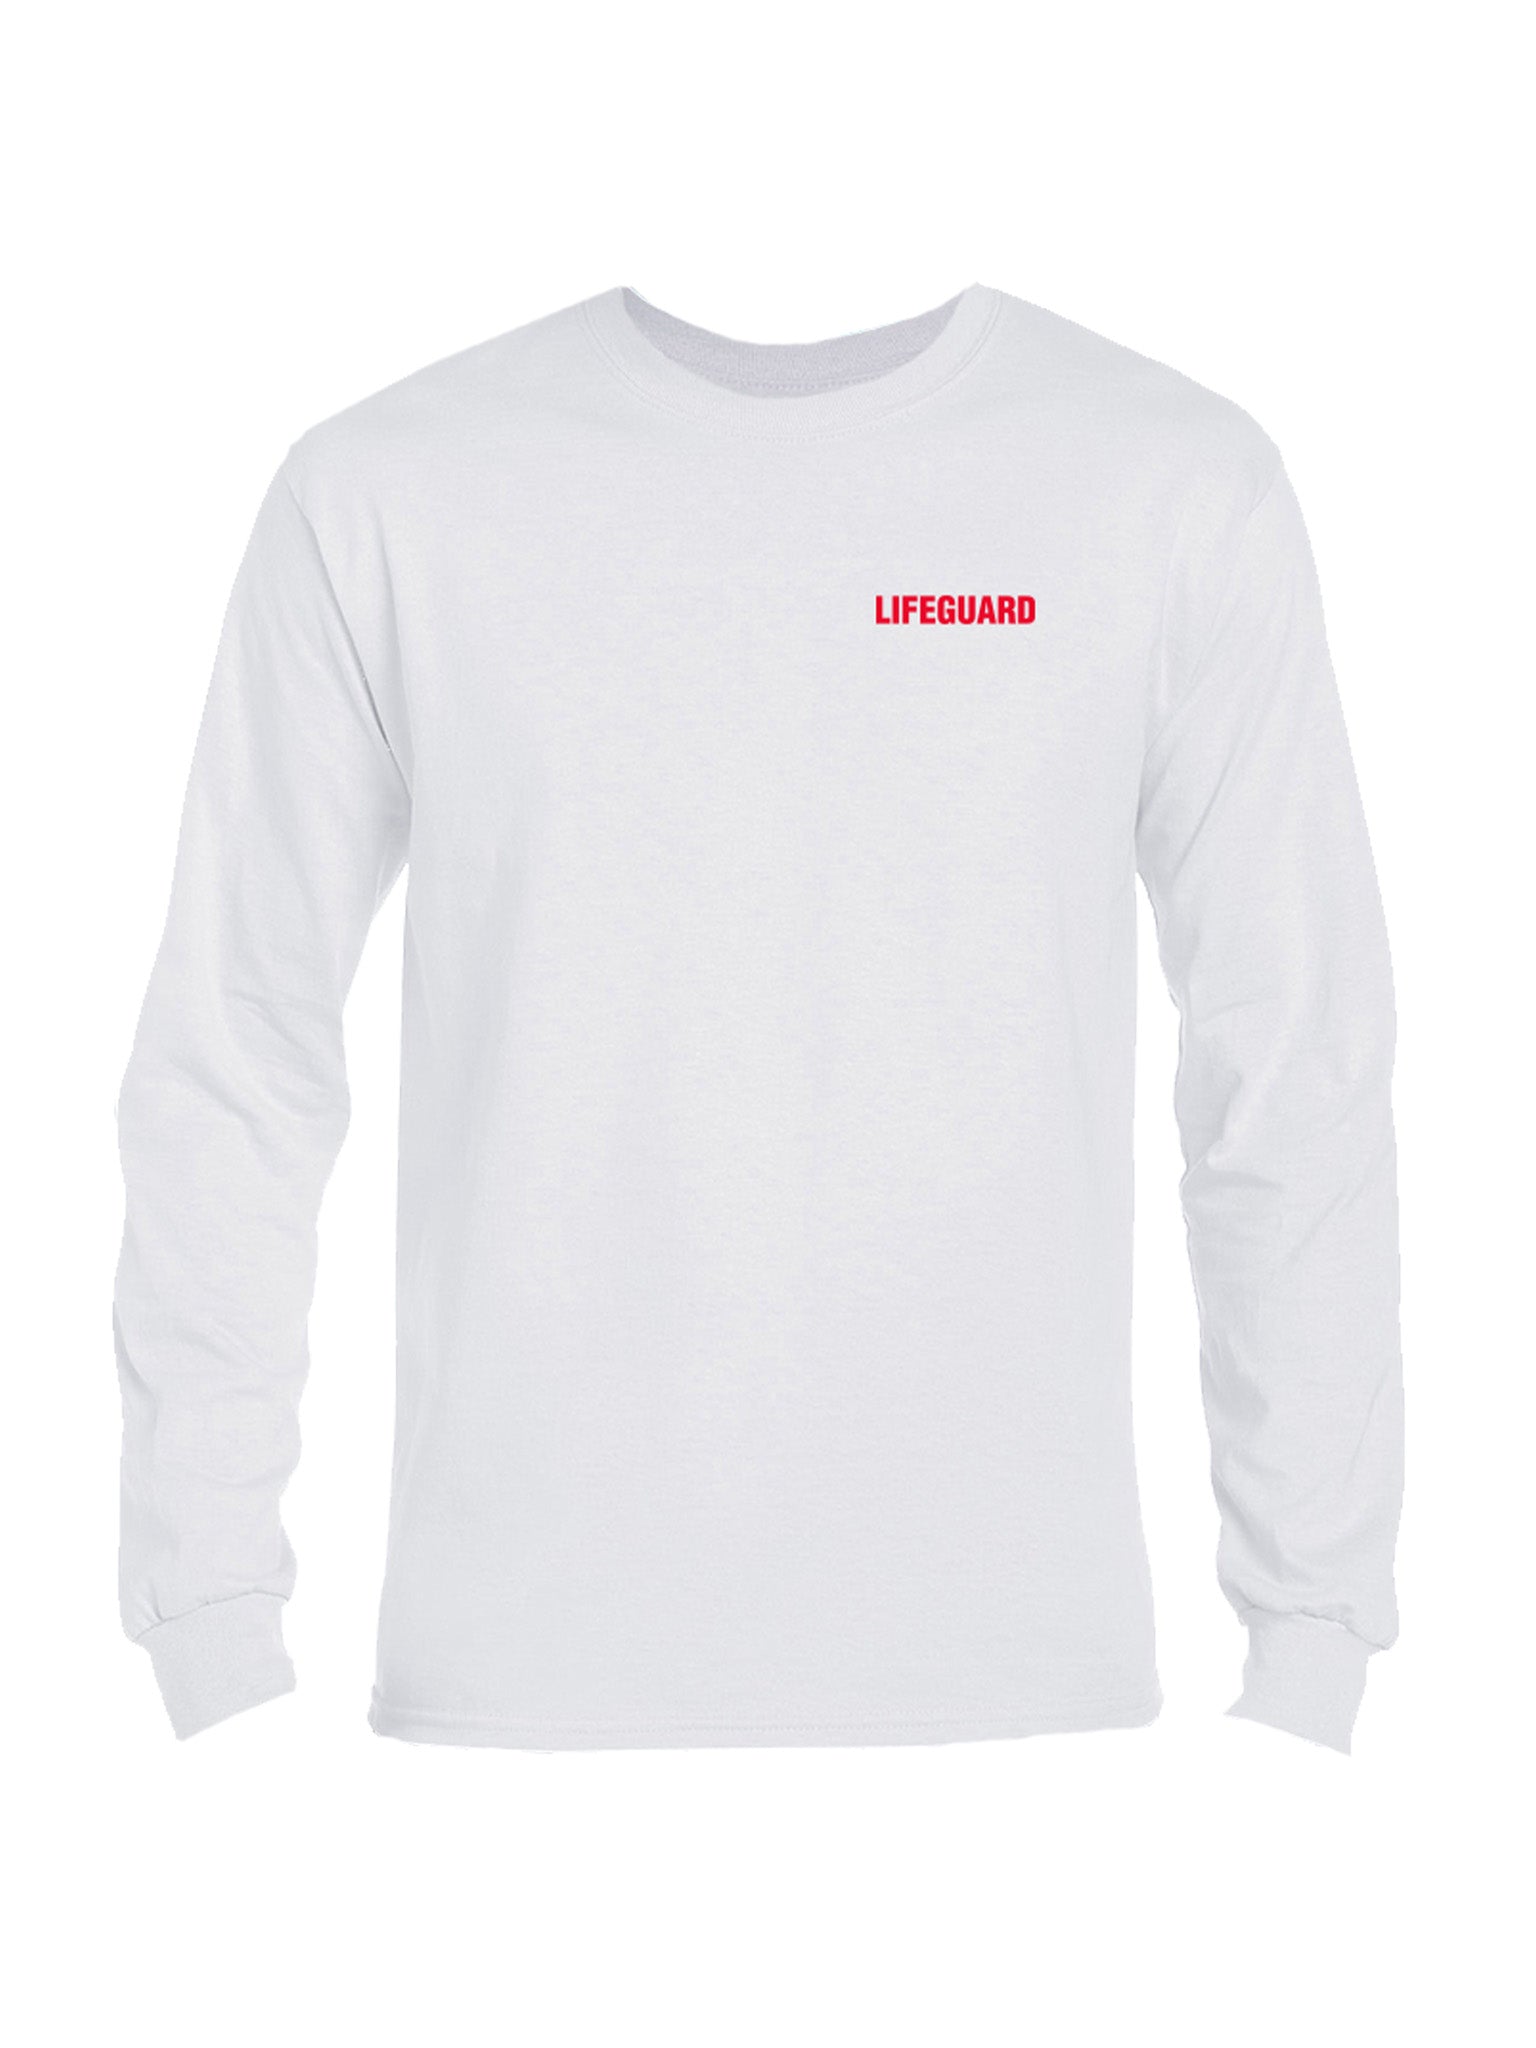 ¨Lifeguard¨ Long Sleeve T-Shirt - White